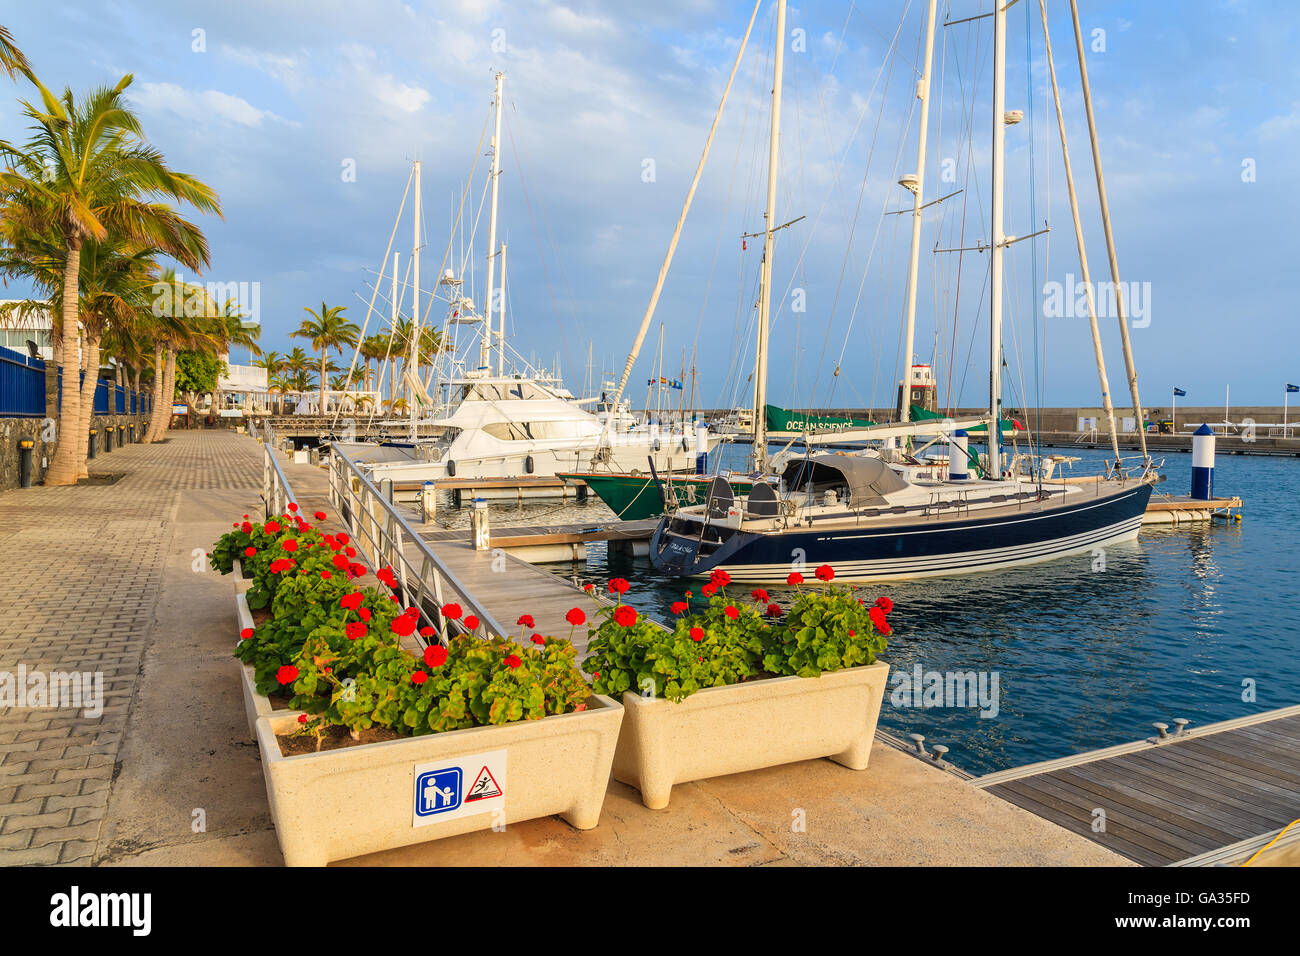 PUERTO CALERO MARINA, LANZAROTE ISLAND - JAN 17, 2015: luxury boats in port built in Caribbean style in Puerto Calero. Canary Islands are popular sailing destination. Stock Photo